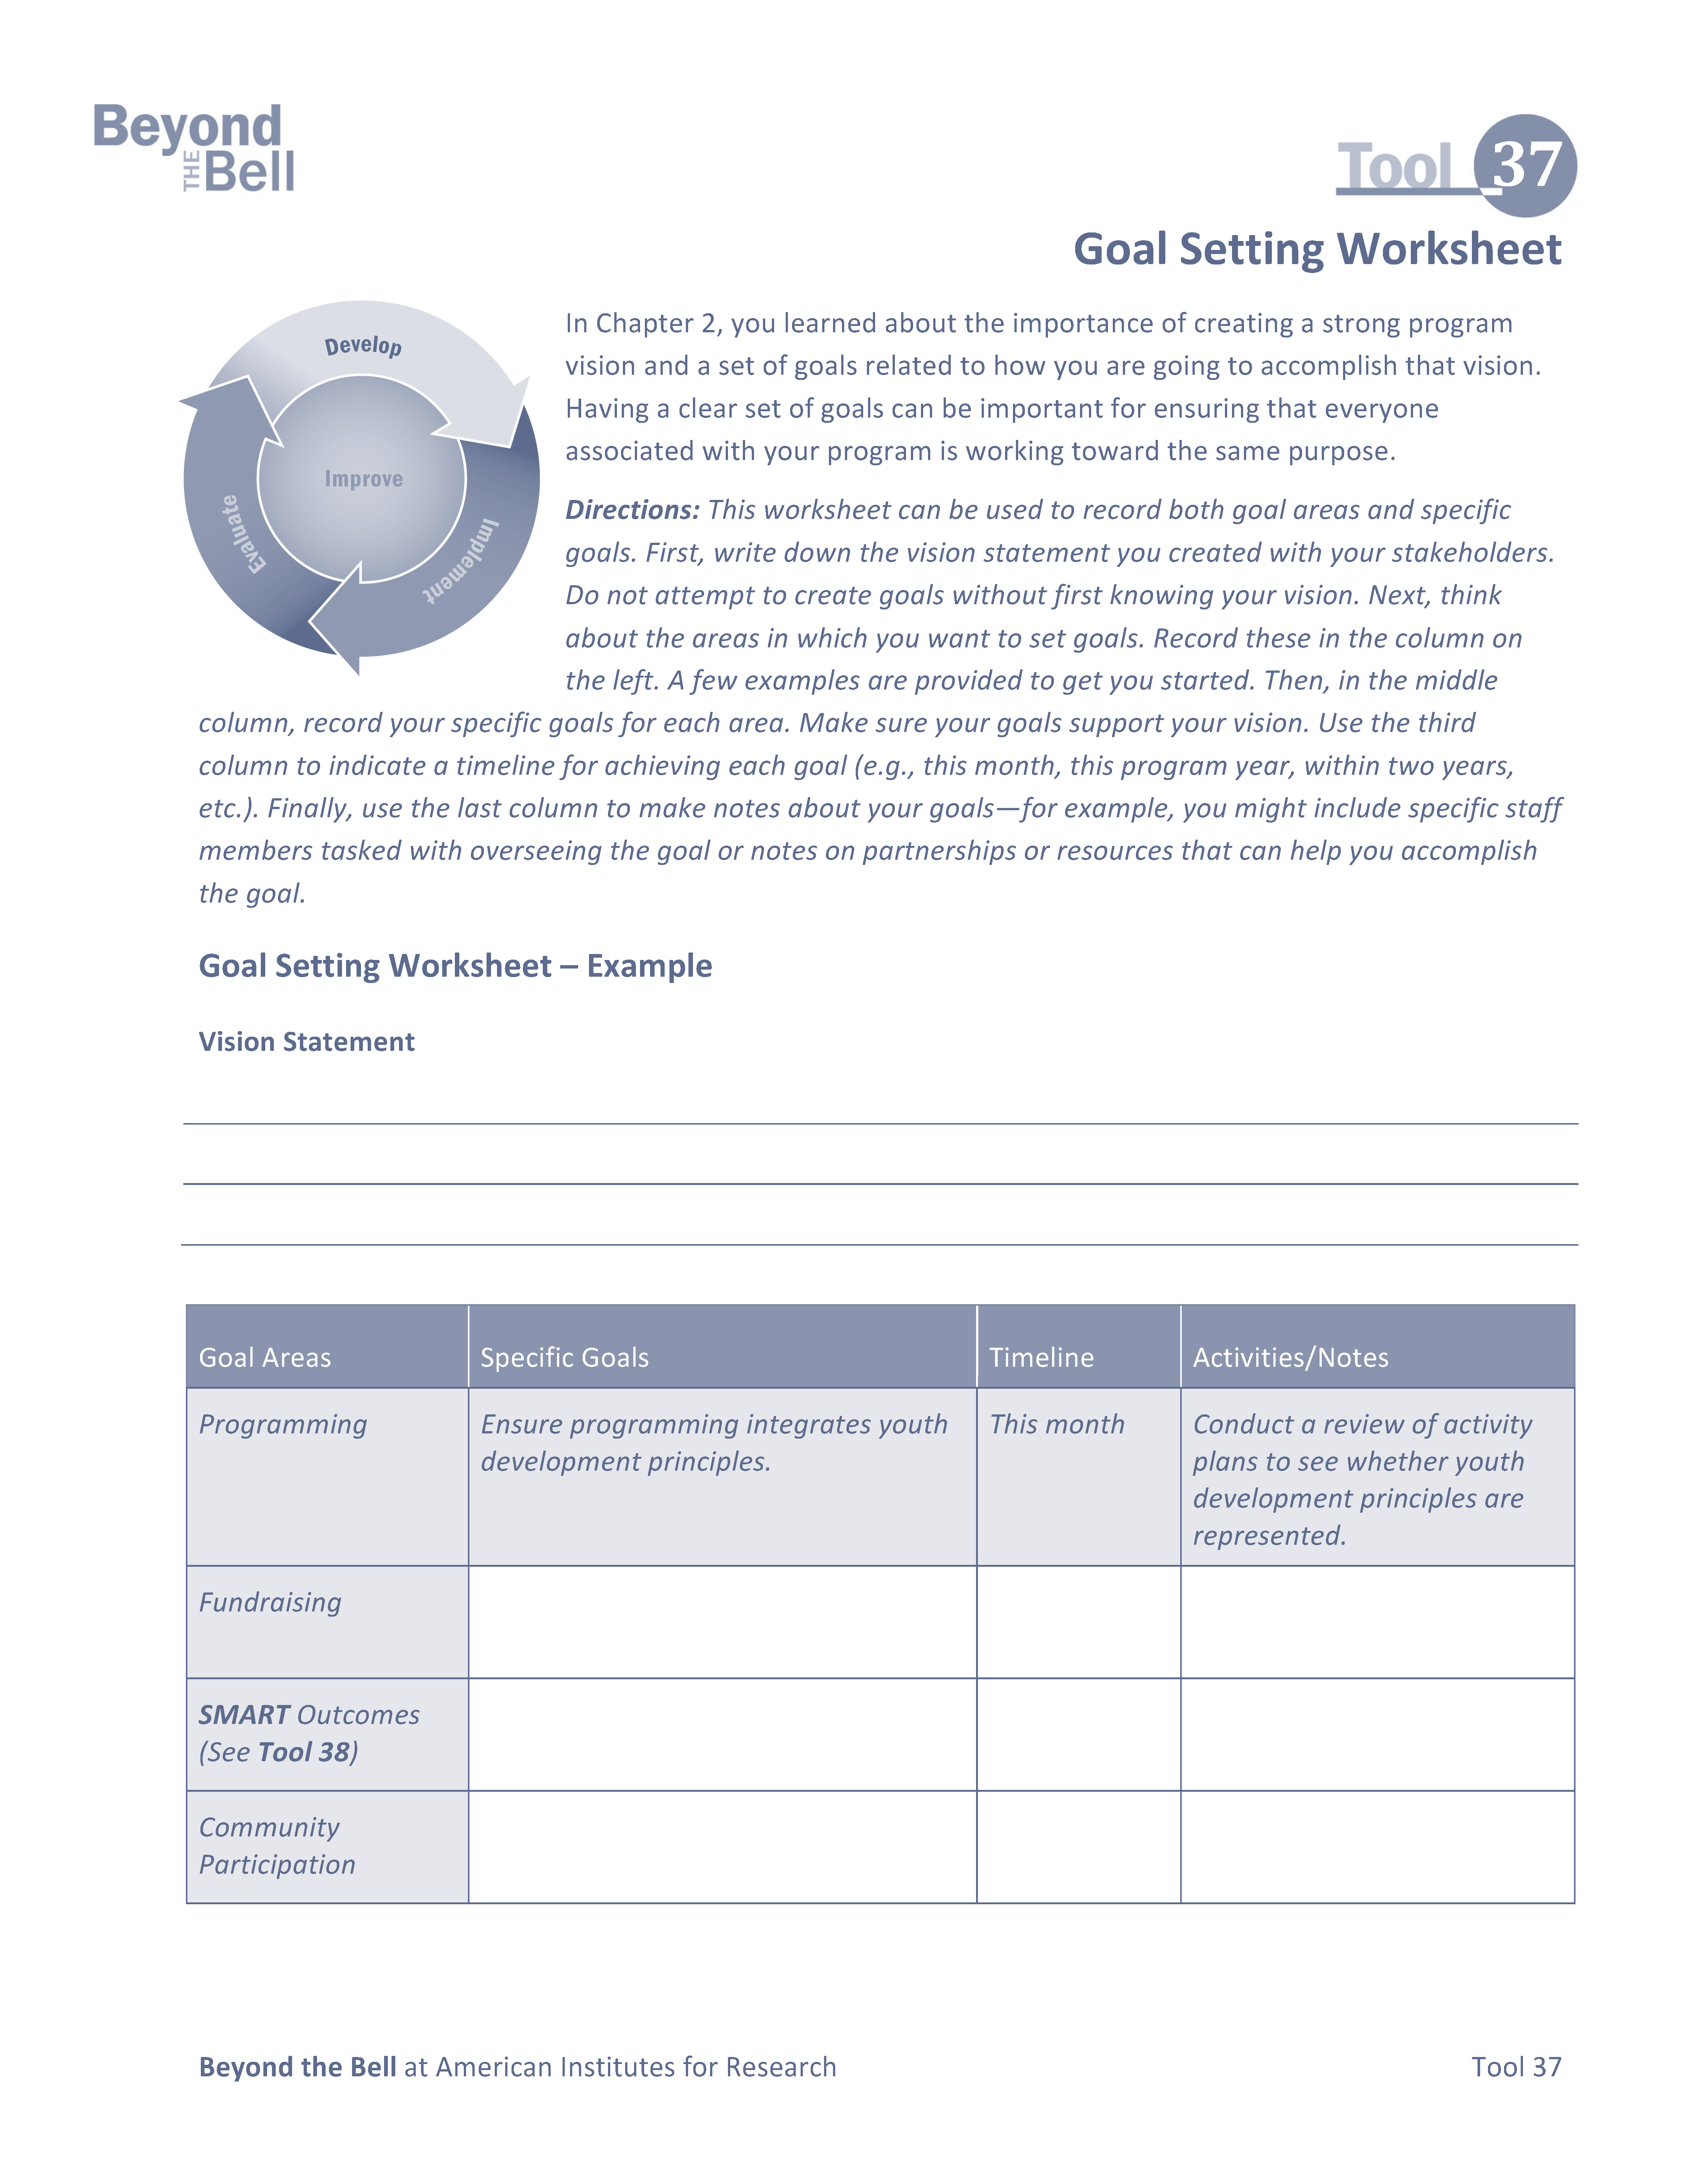 Beyond the Bell | Tool 37 - Goal Setting Worksheet 1